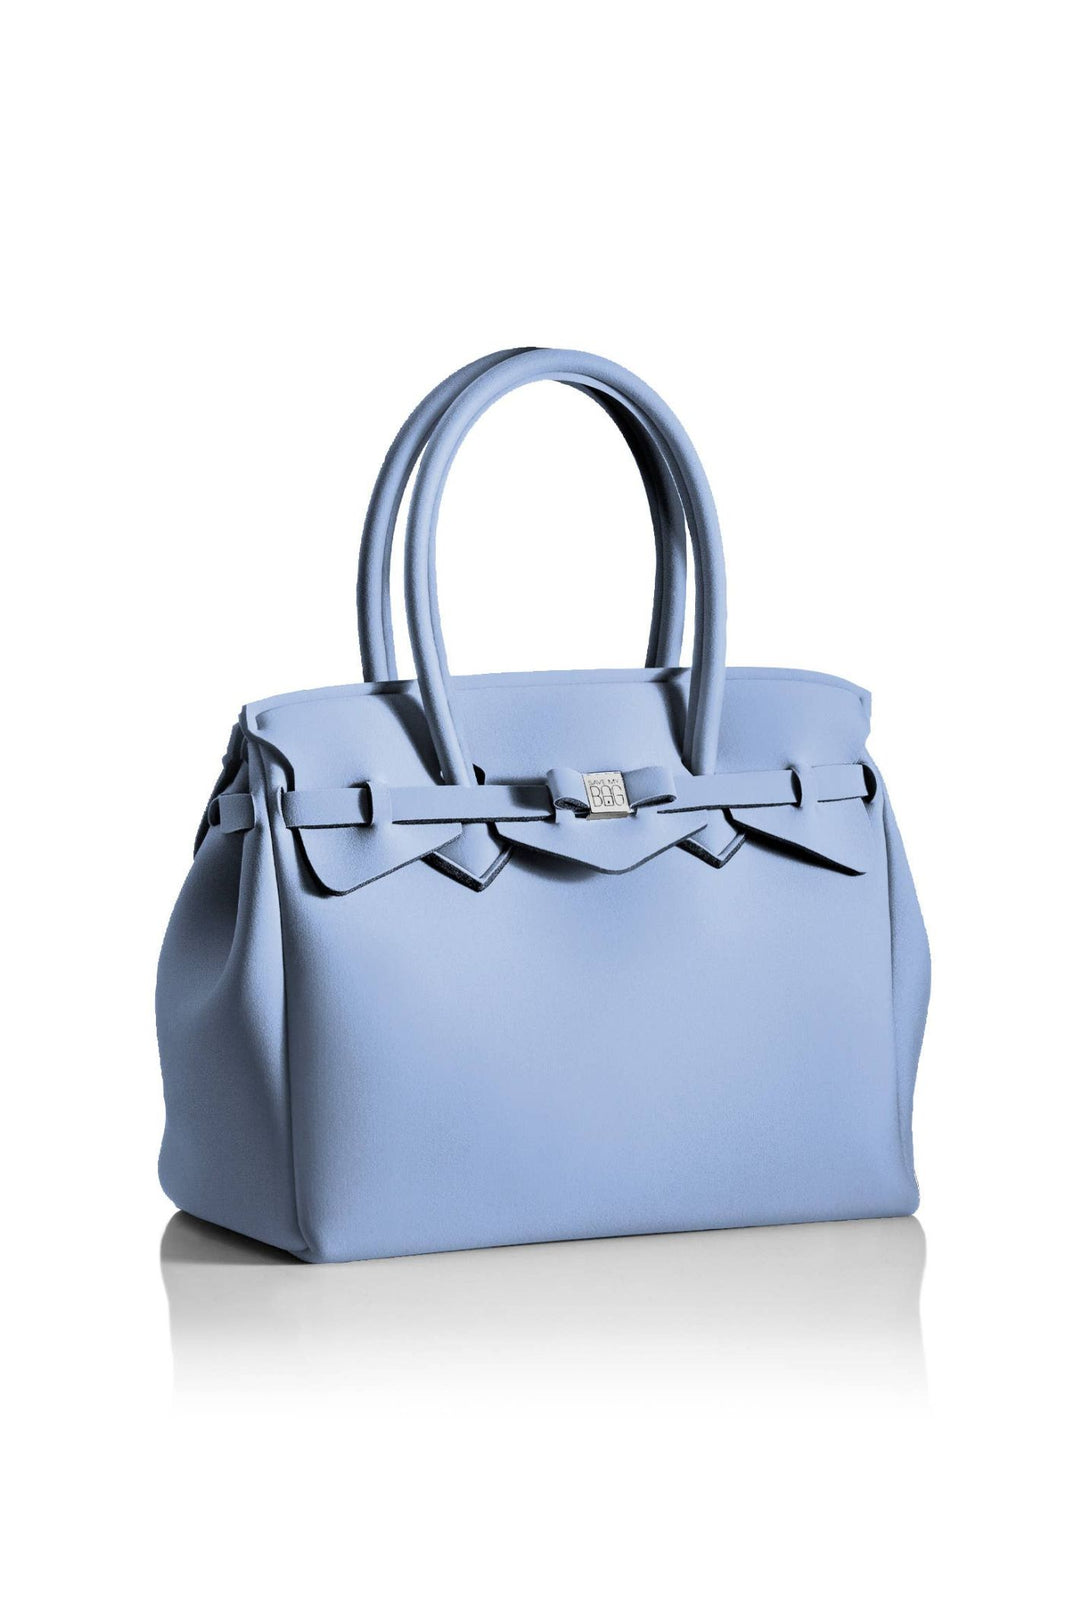 Save My Bag Paradise Blue Washable Eco Neoprene Handbag